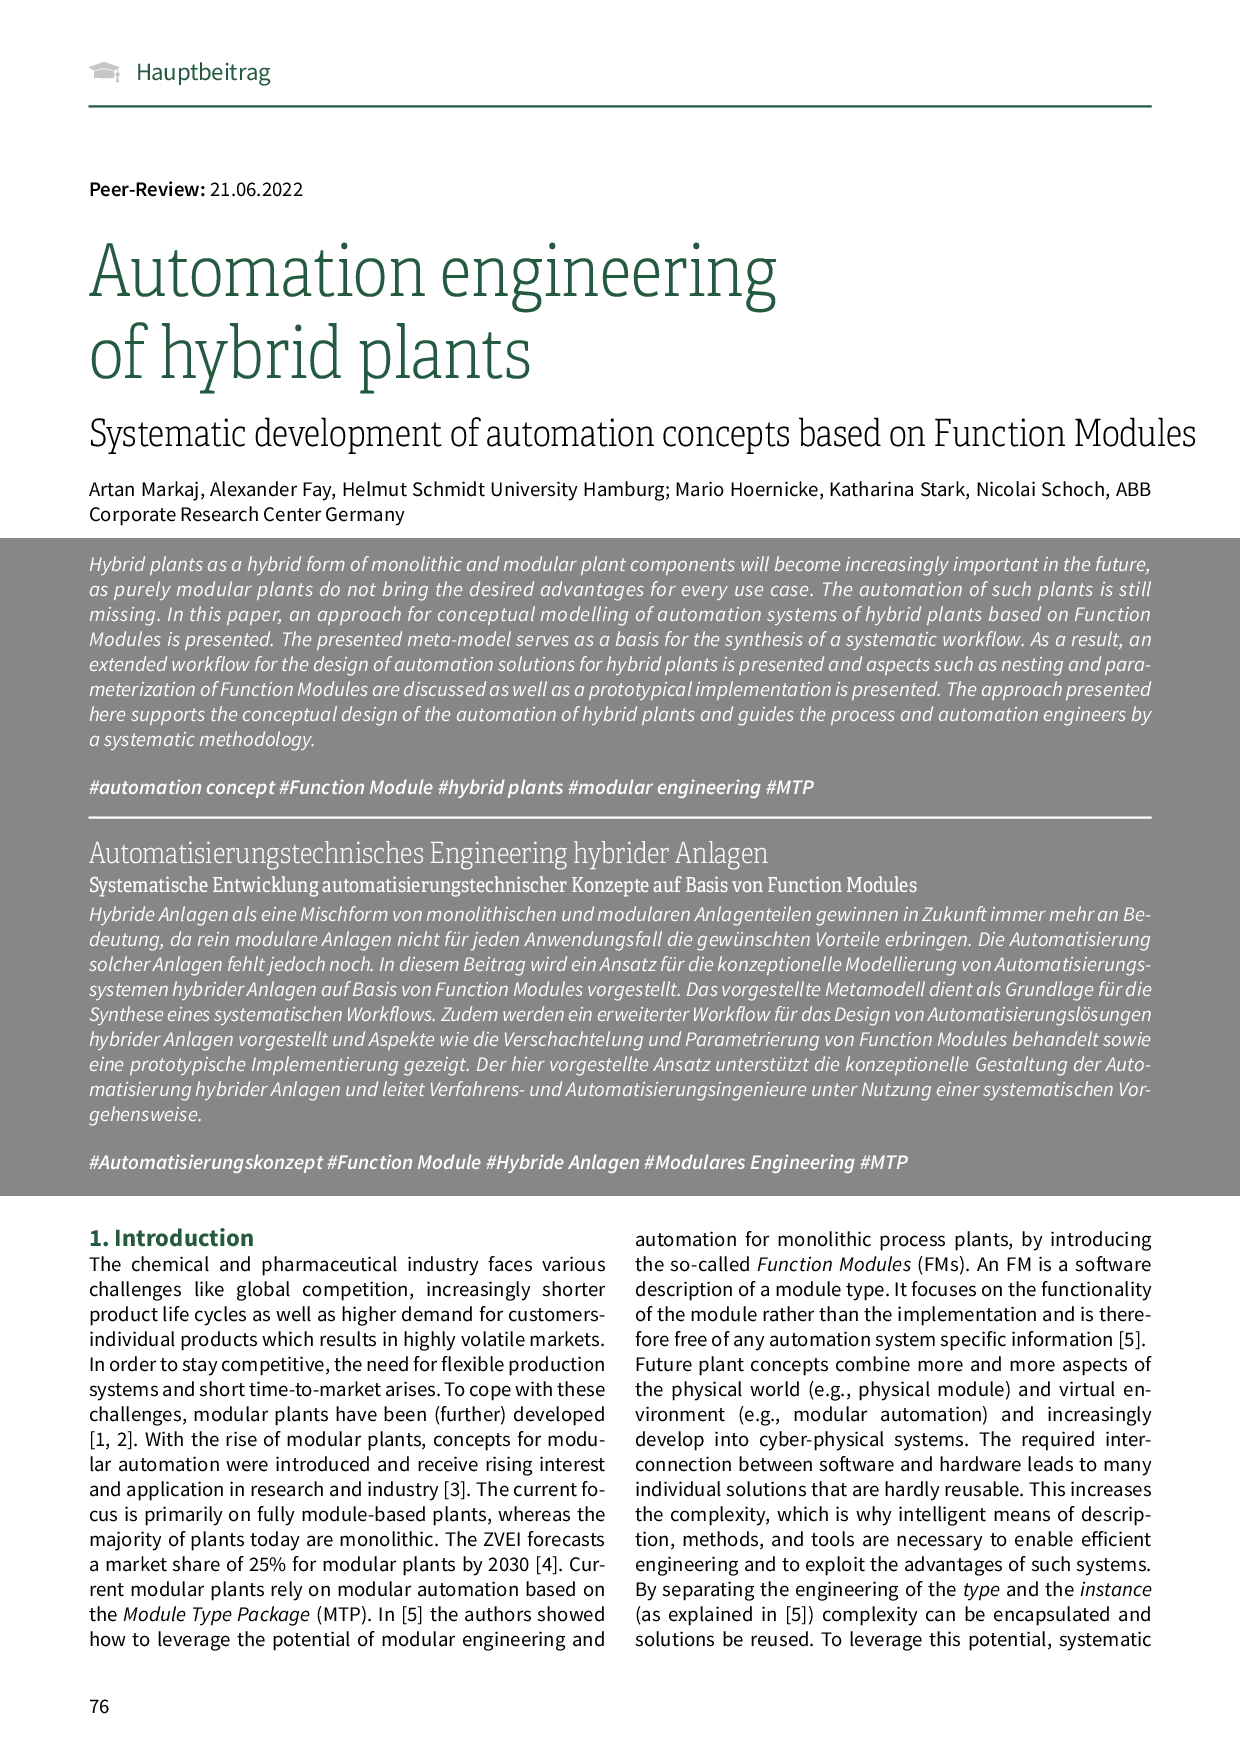 Automation engineering of hybrid plants